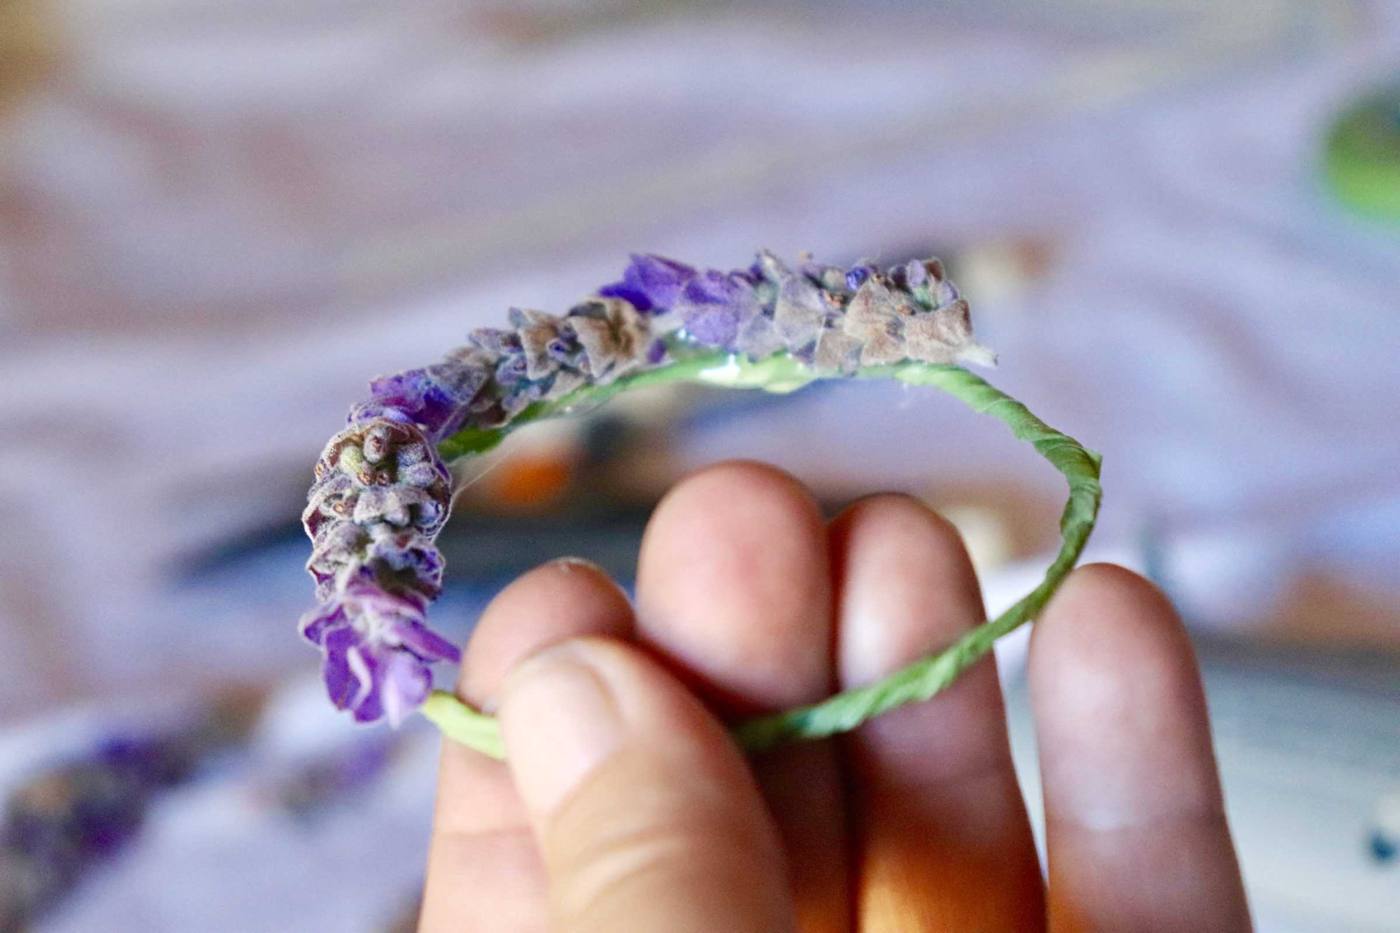 Lavender wreaths bind adherence to bleeding adhesives